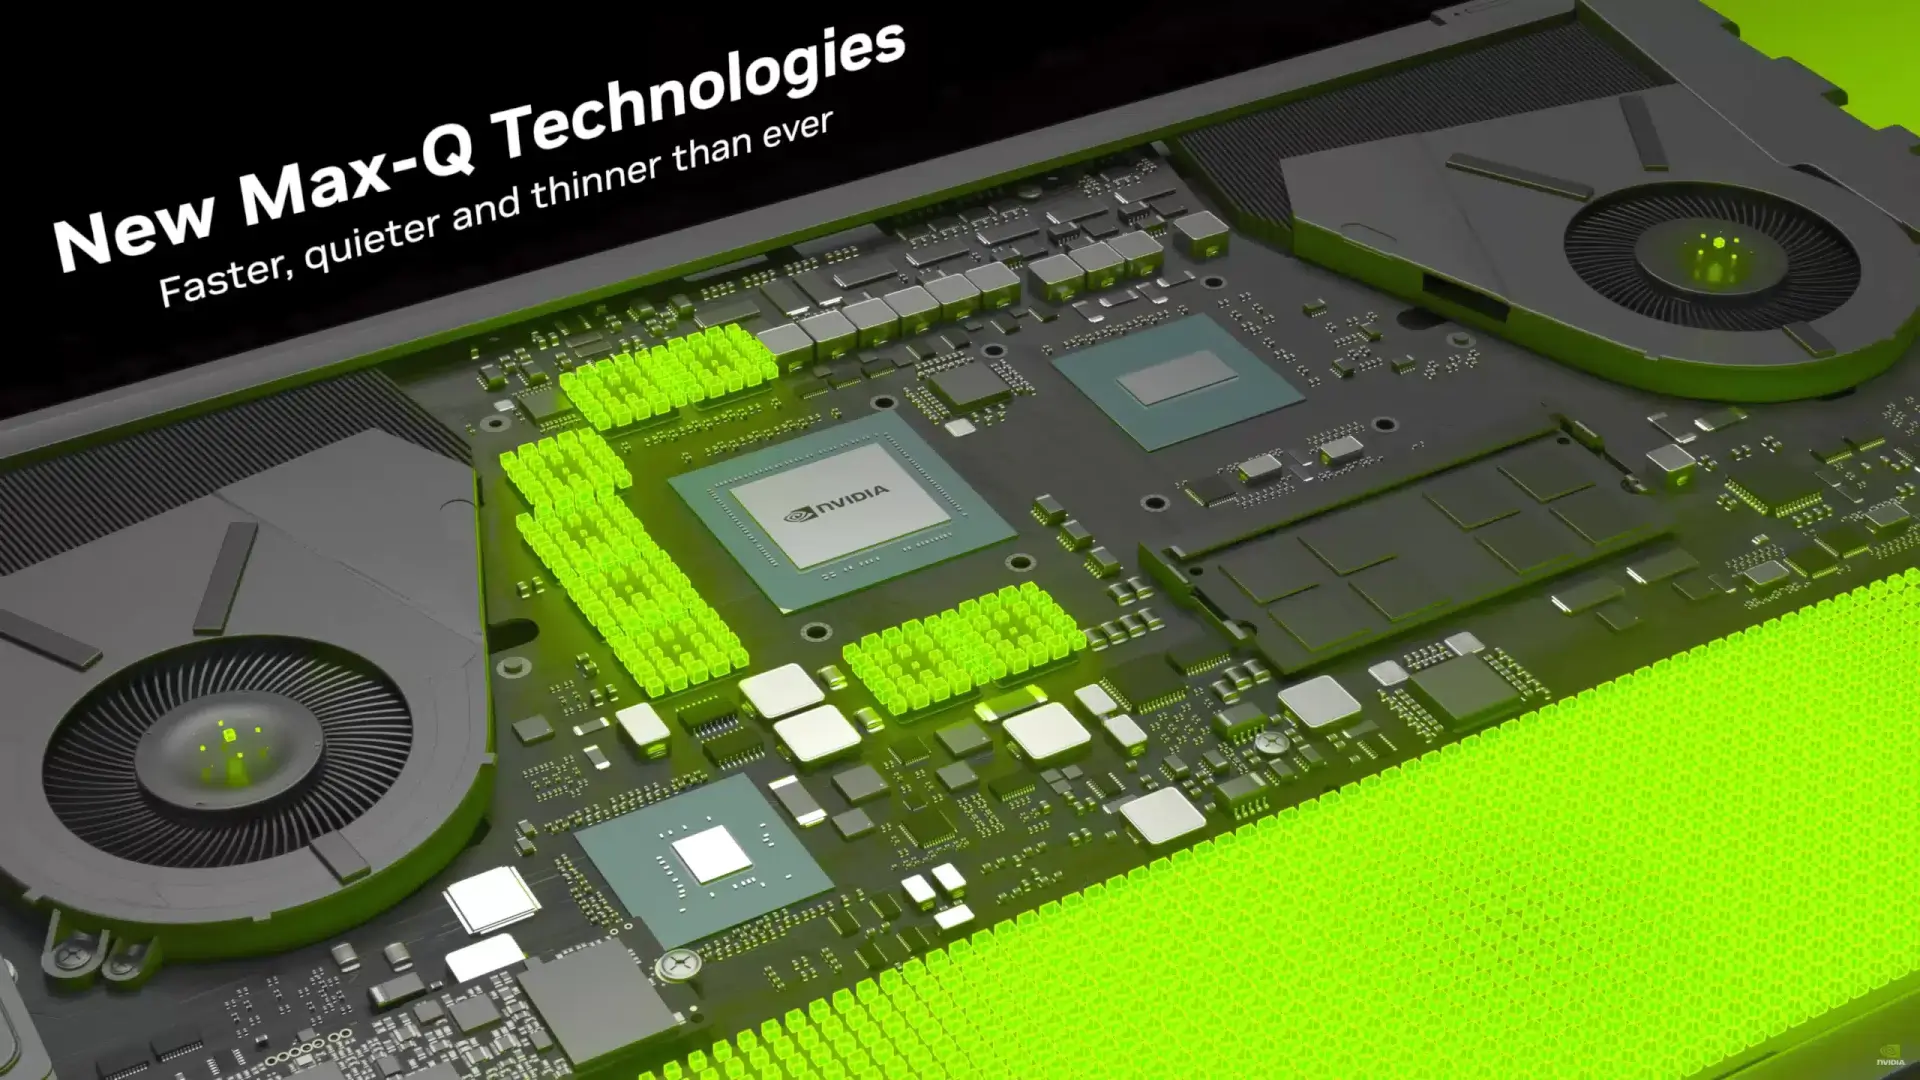 Nvidia GeForce RTX 4060 Laptop vs Nvidia GeForce RTX 4070 Laptop